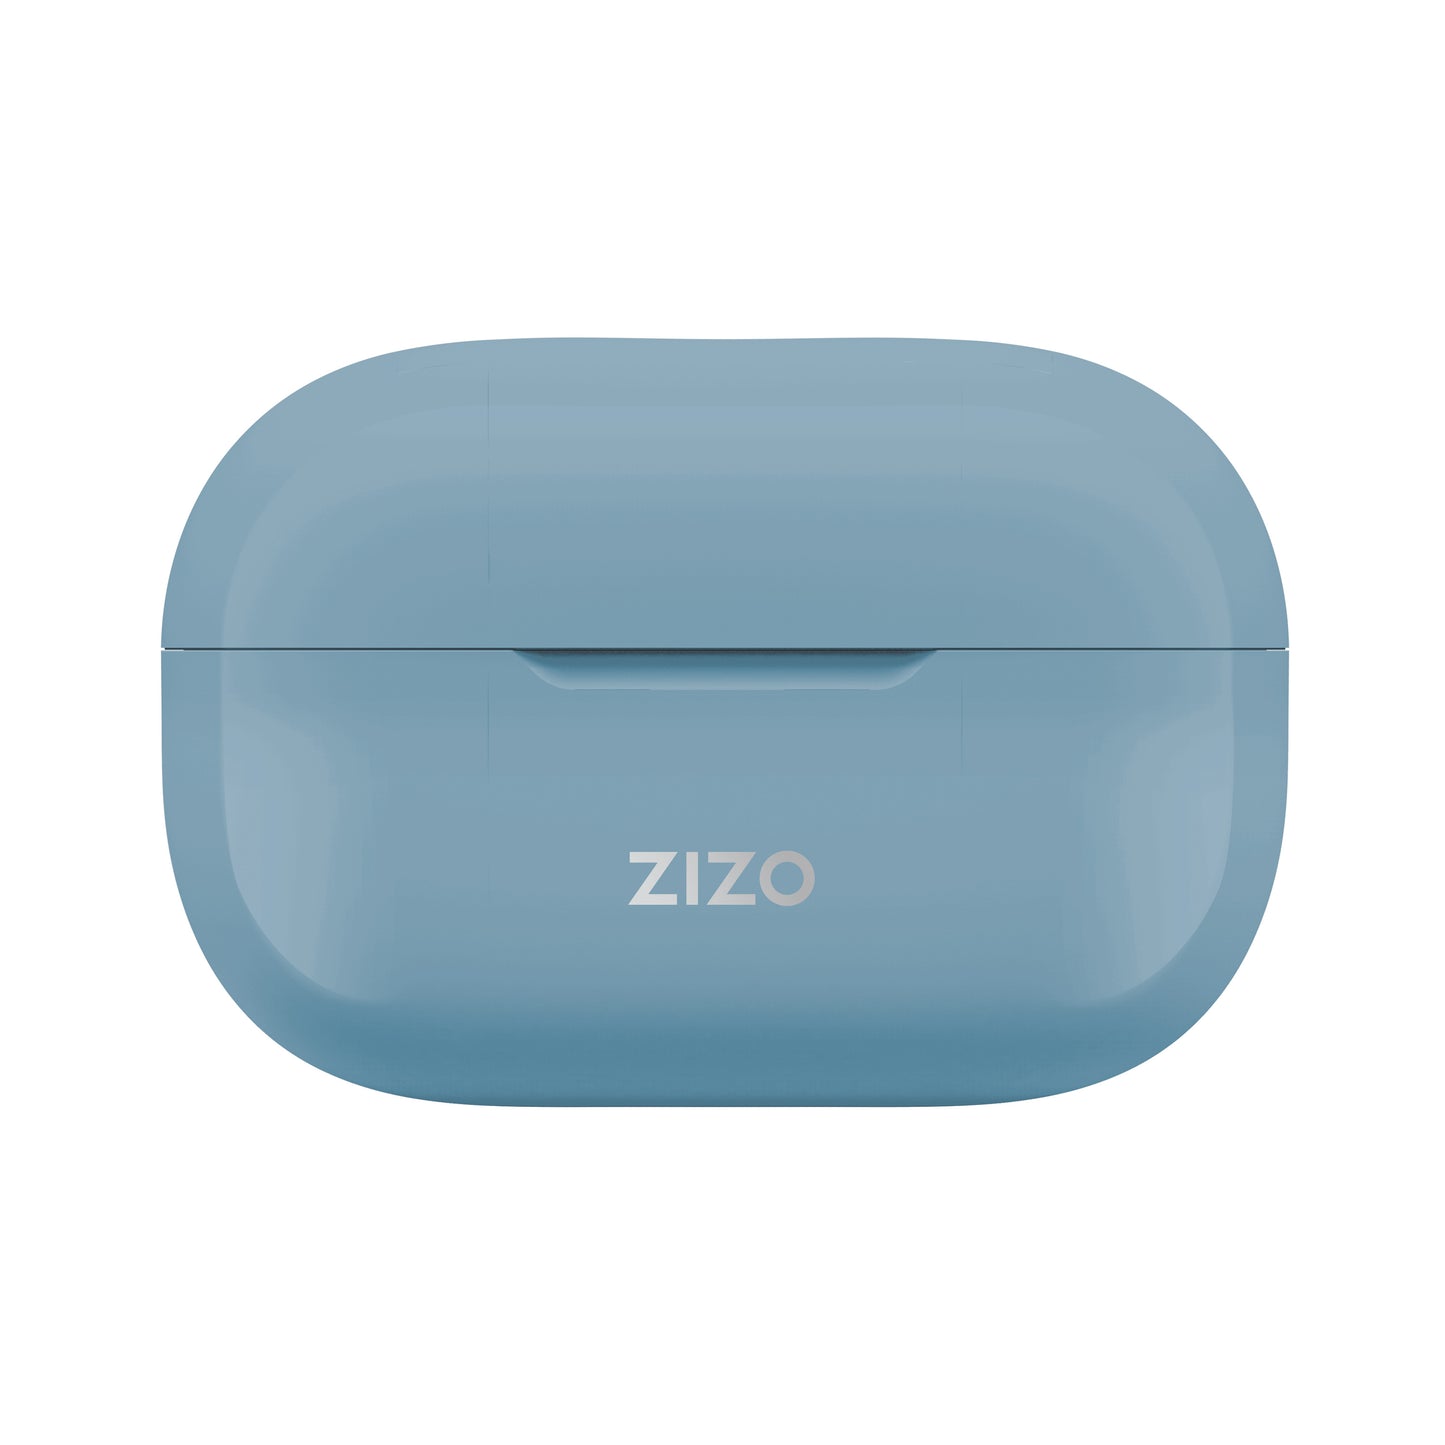 ZIZO PULSE Z2 True Wireless Earbuds with Charging Case - Powder Blue